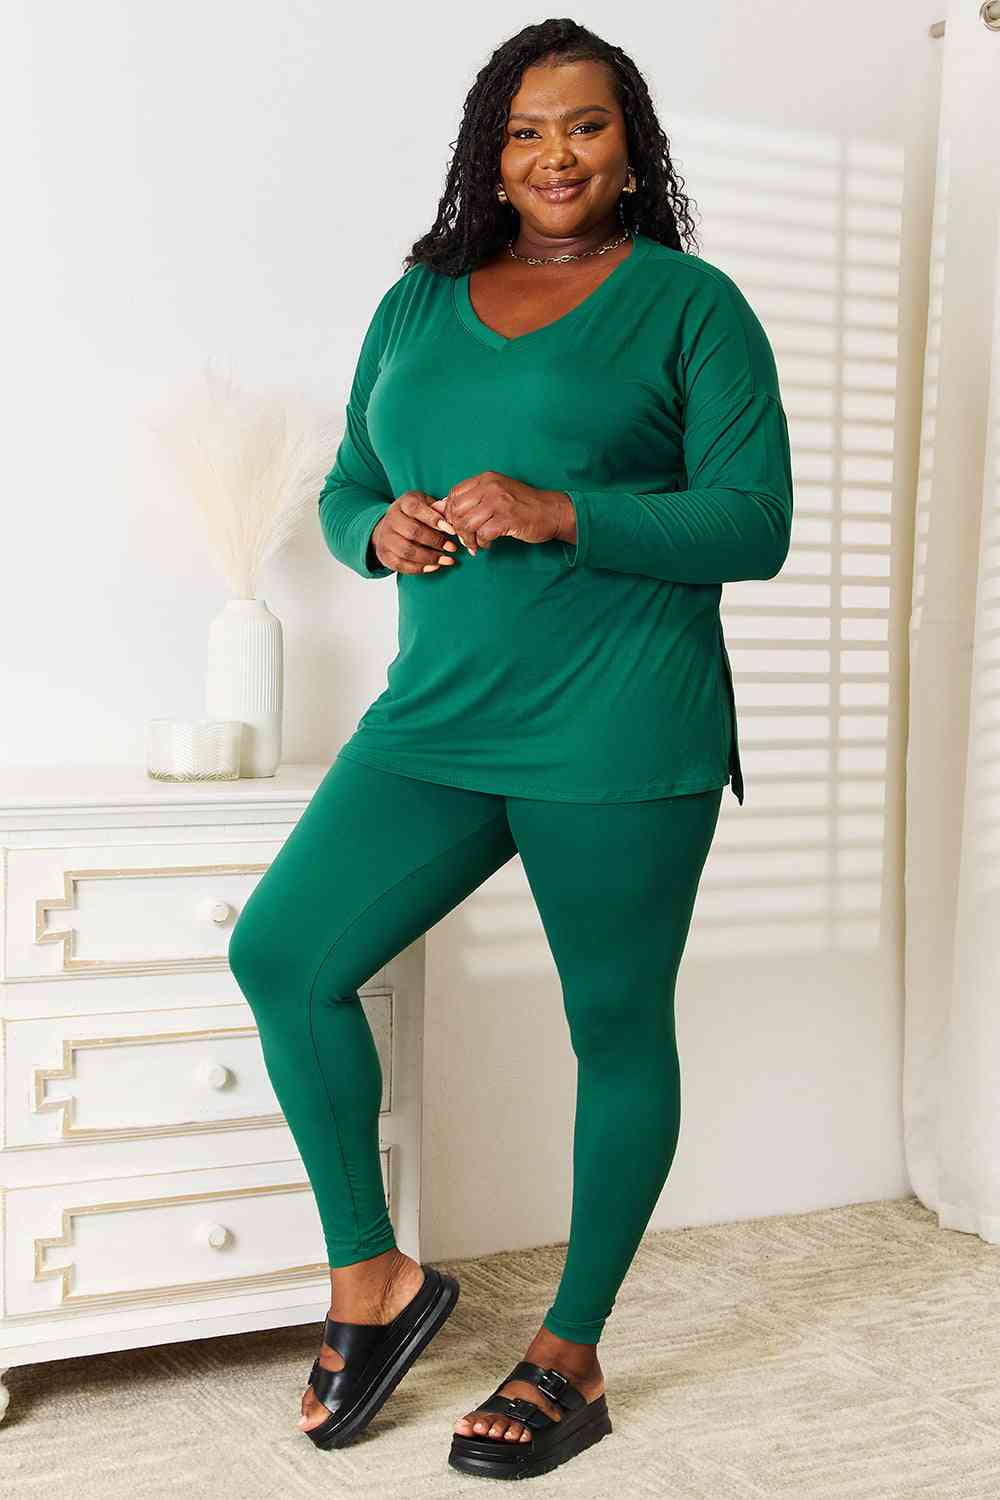 Zenana Lazy Days Full Size Long Sleeve Top and Leggings Set - Only Sizes S, M, XL Left